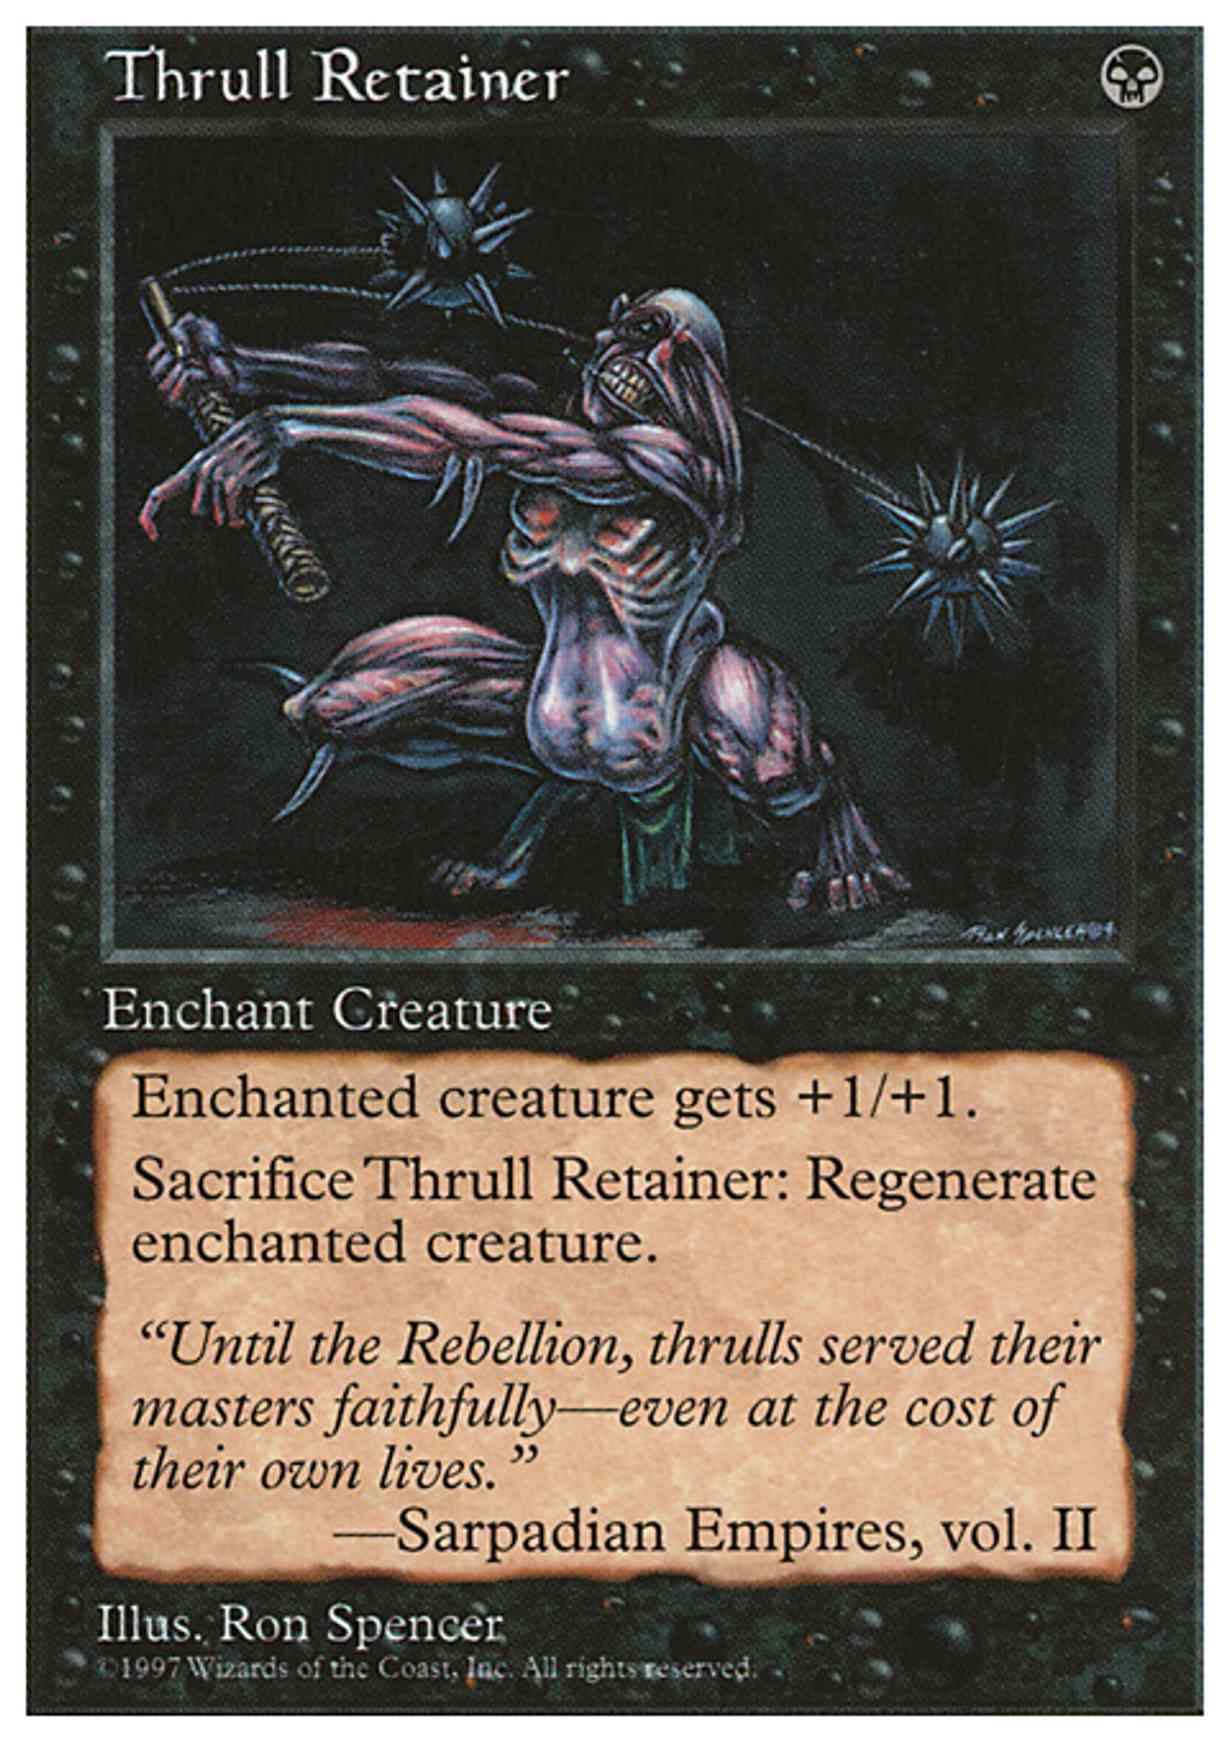 Thrull Retainer magic card front